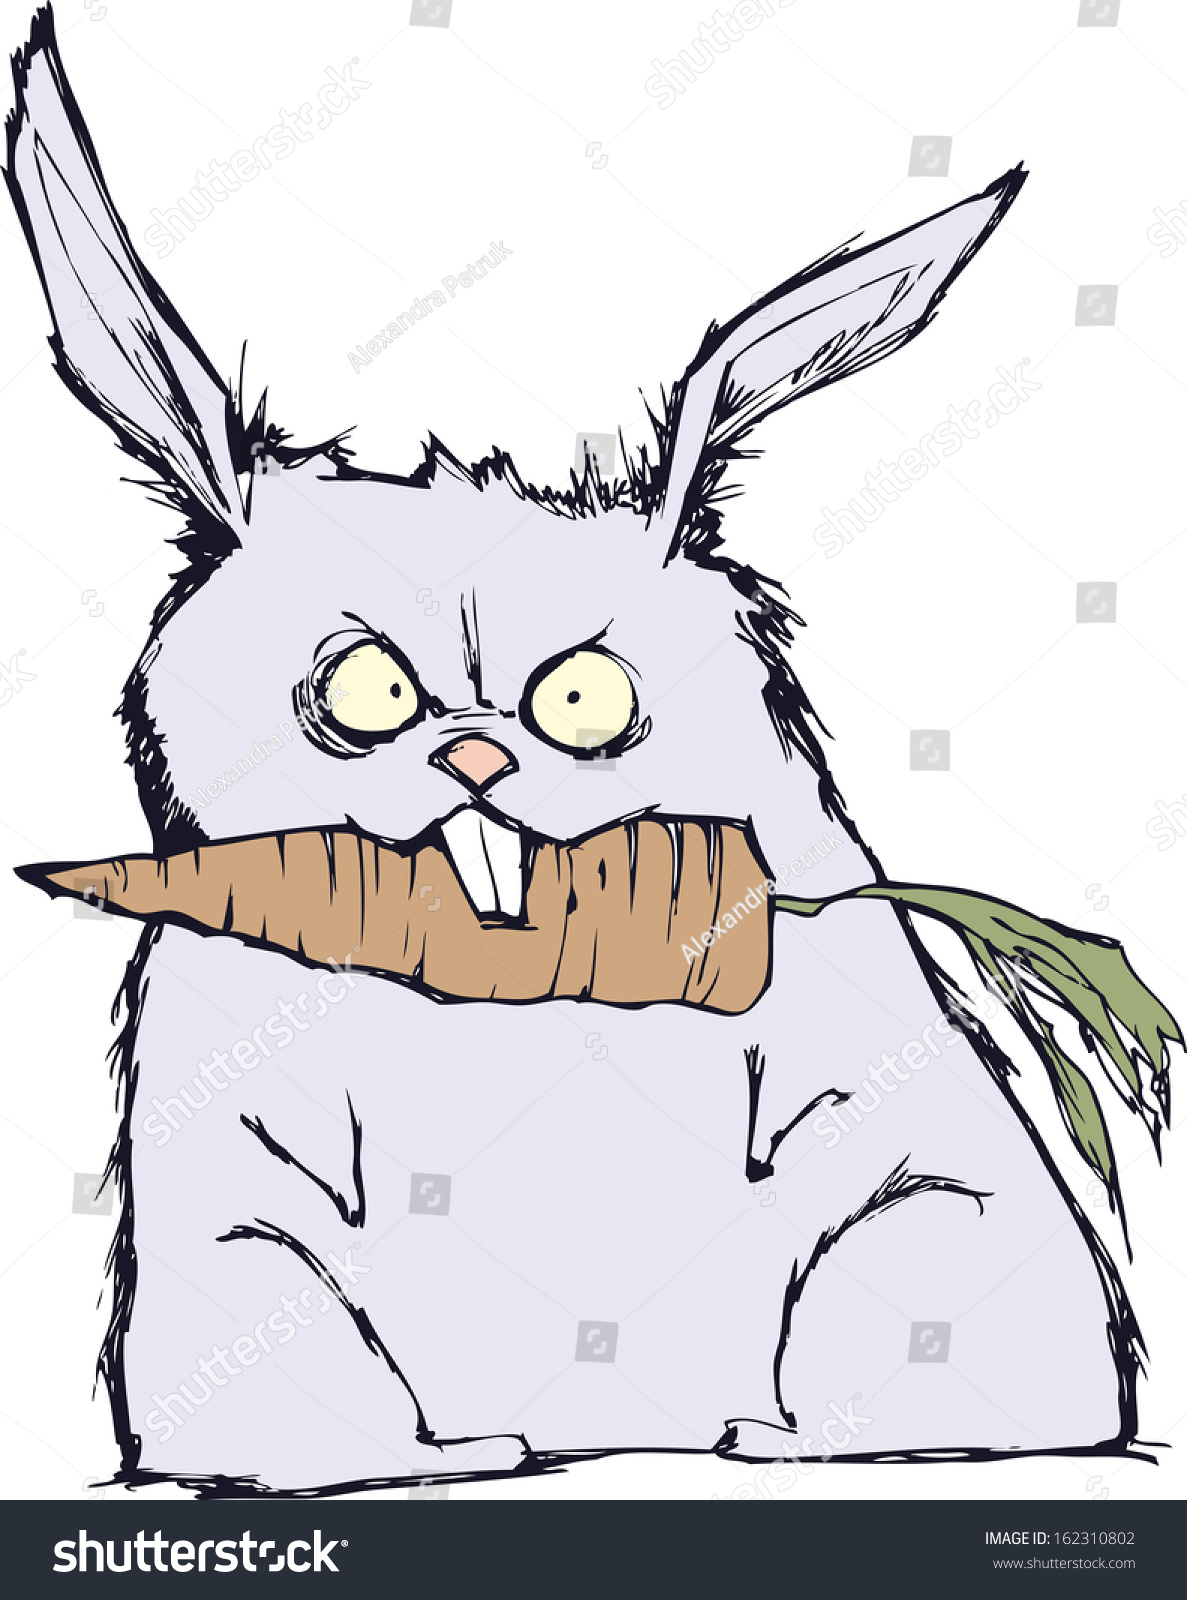 stock-vector-angry-rabbit-162310802.jpg